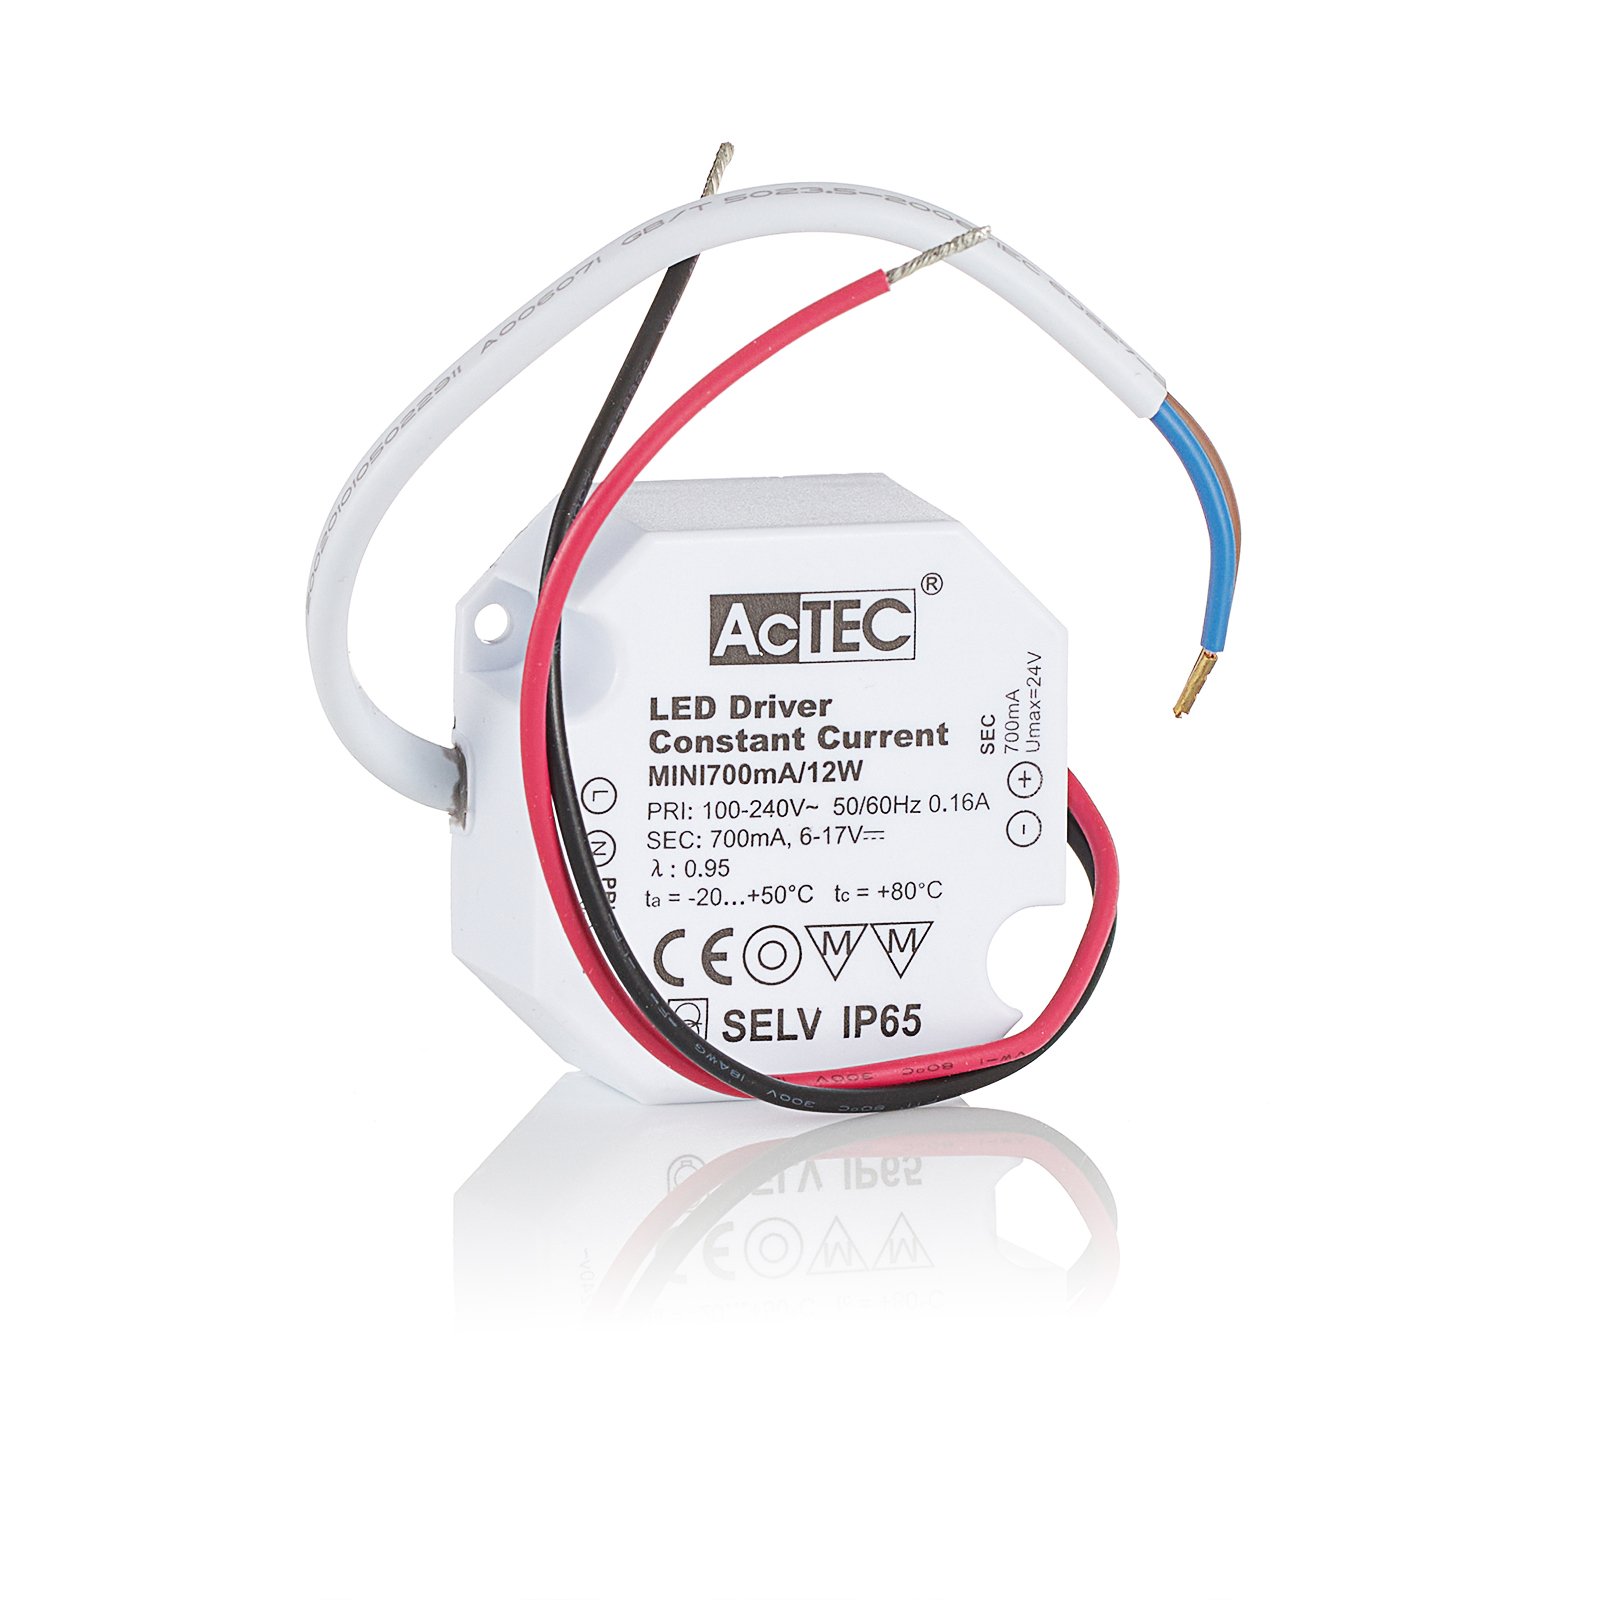 AcTEC Mini LED driver CC 700mA, 12W, IP65